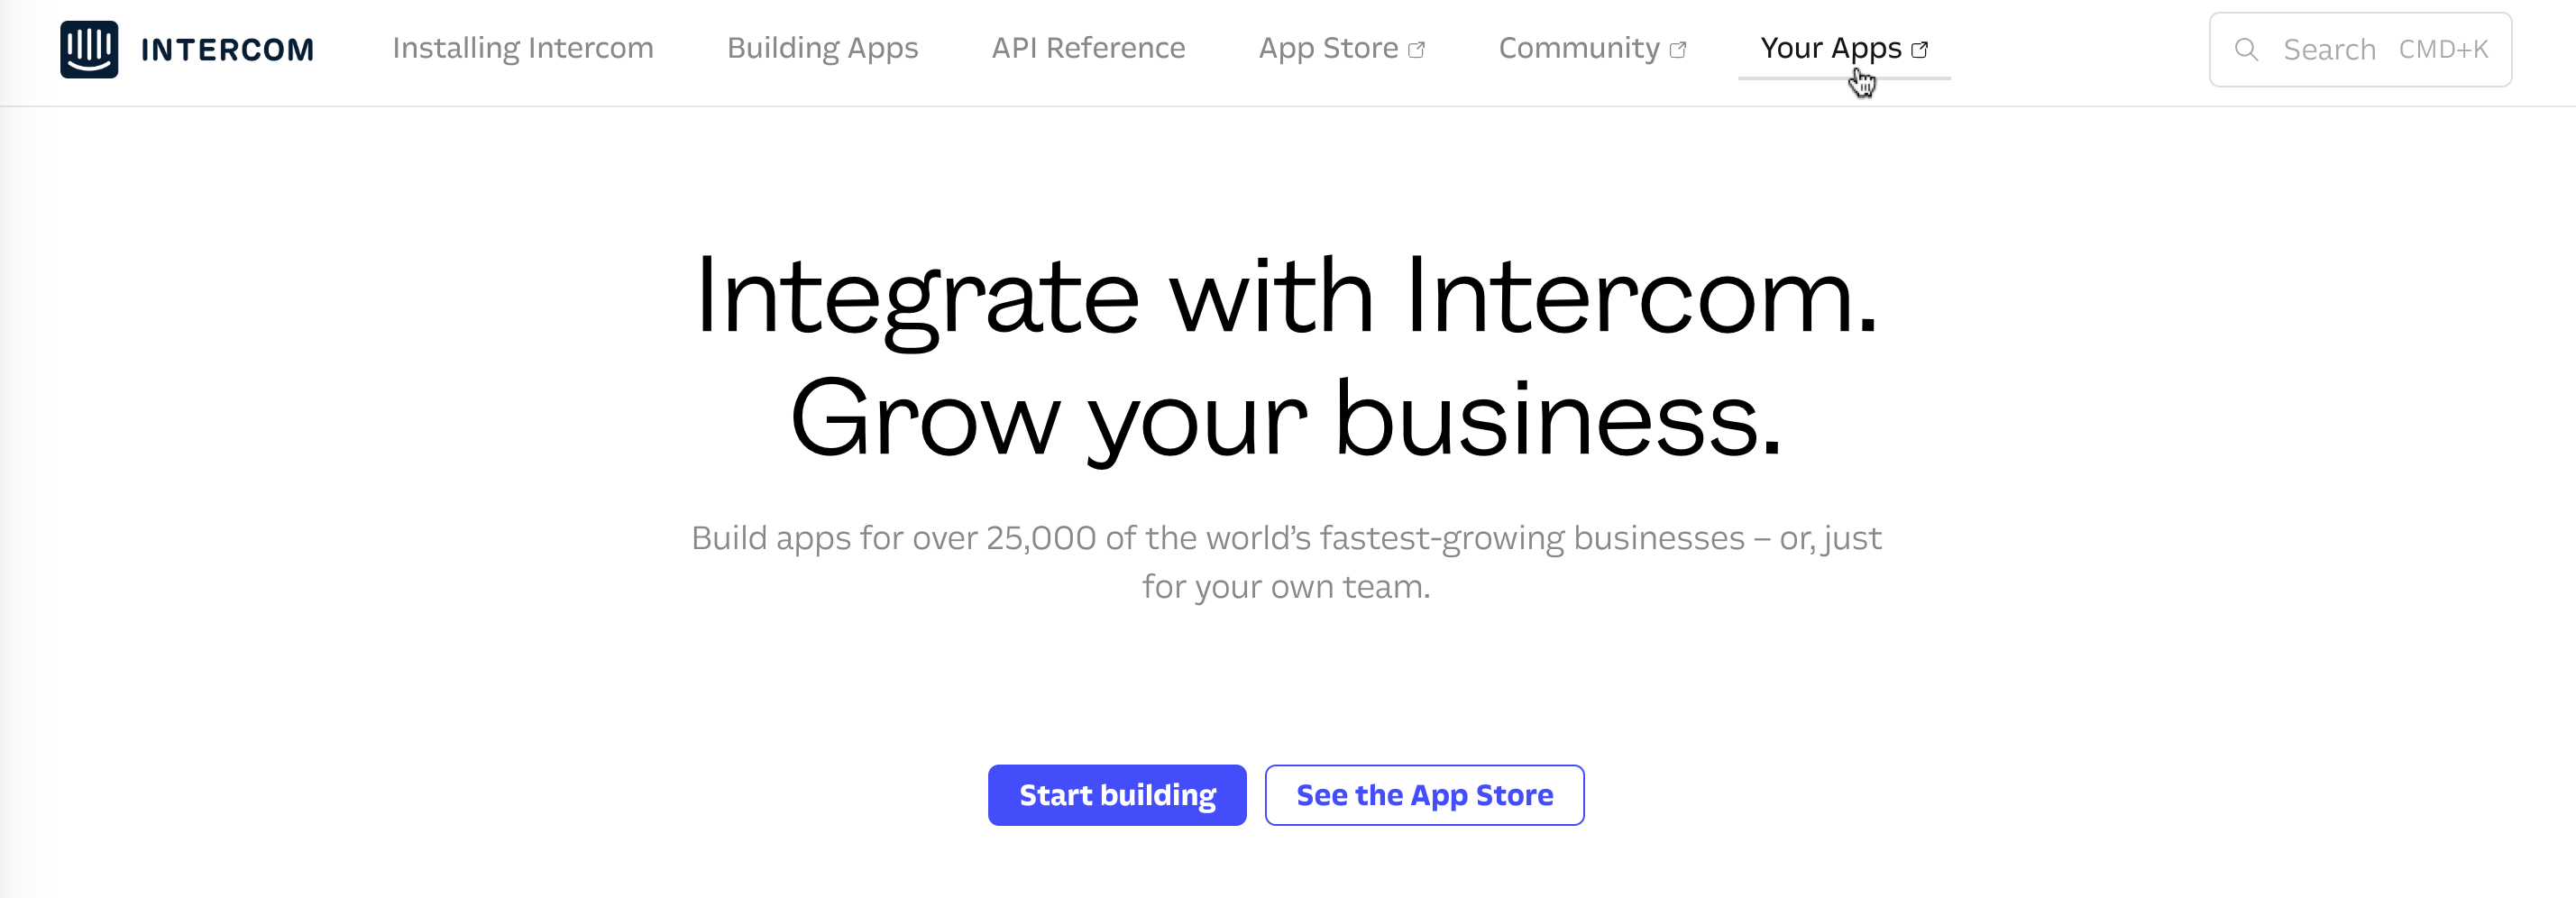 Intercom developer page